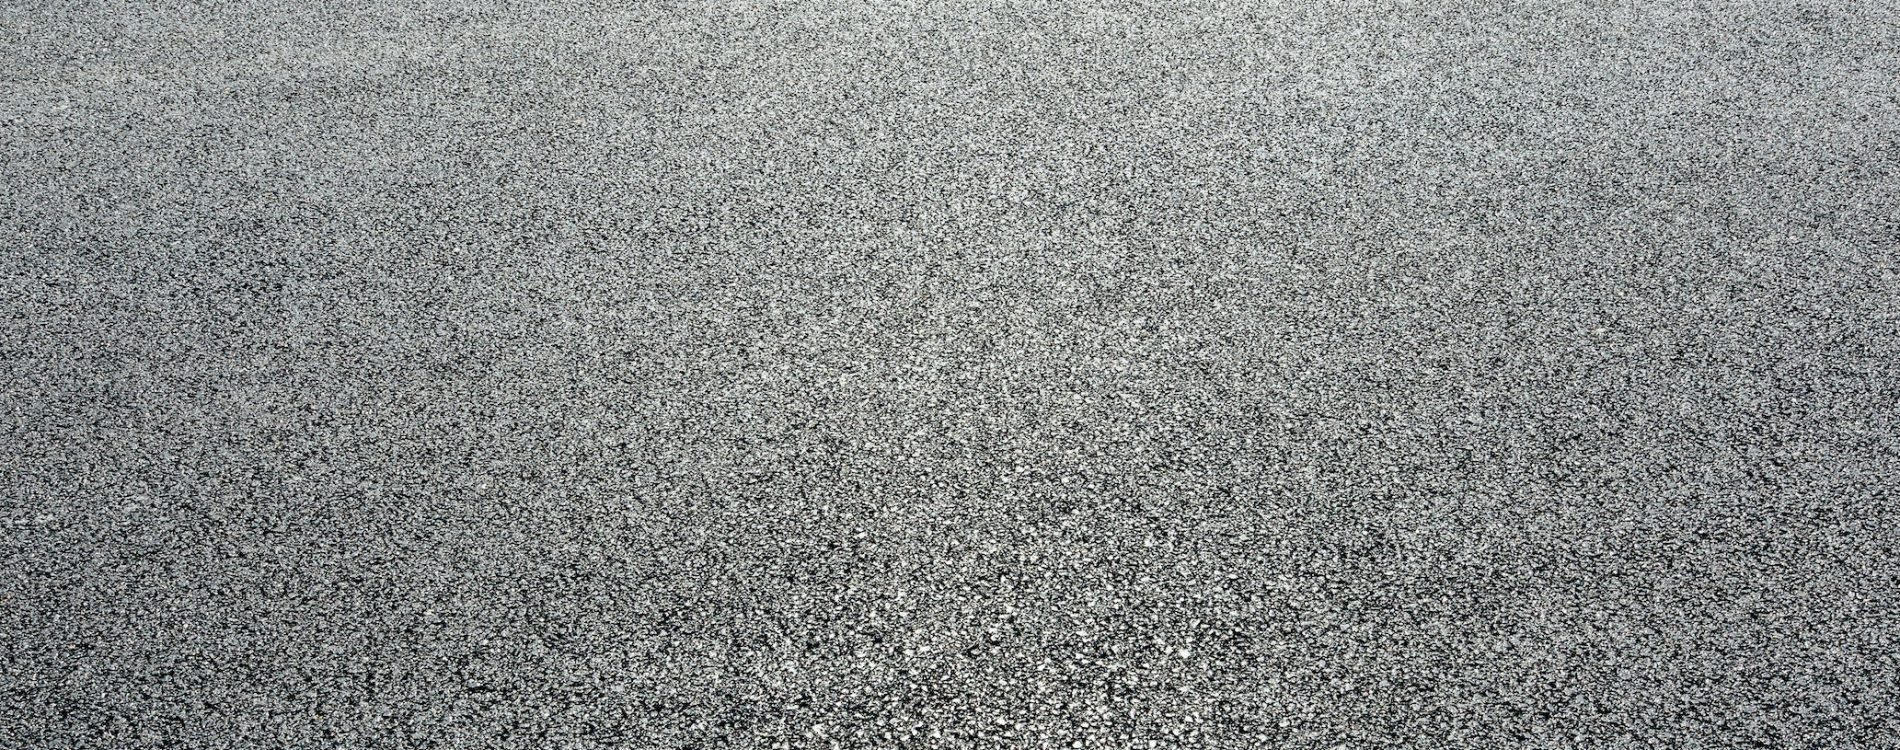 asphalt resurface replace central ohio